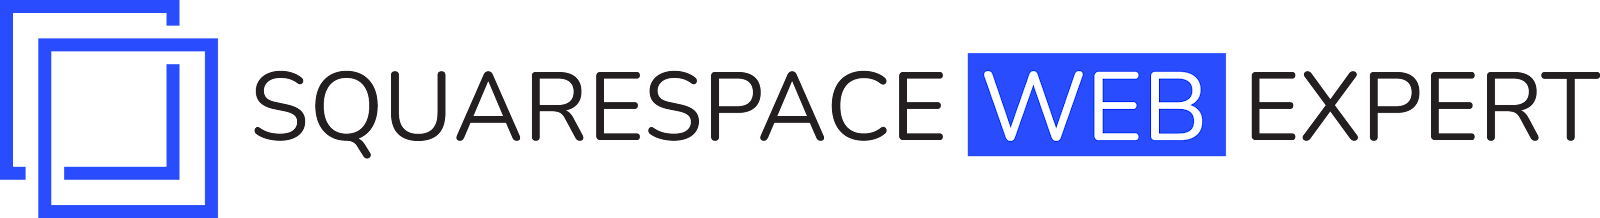 Squarespace Web Expert - Hire a Squarespace Expert